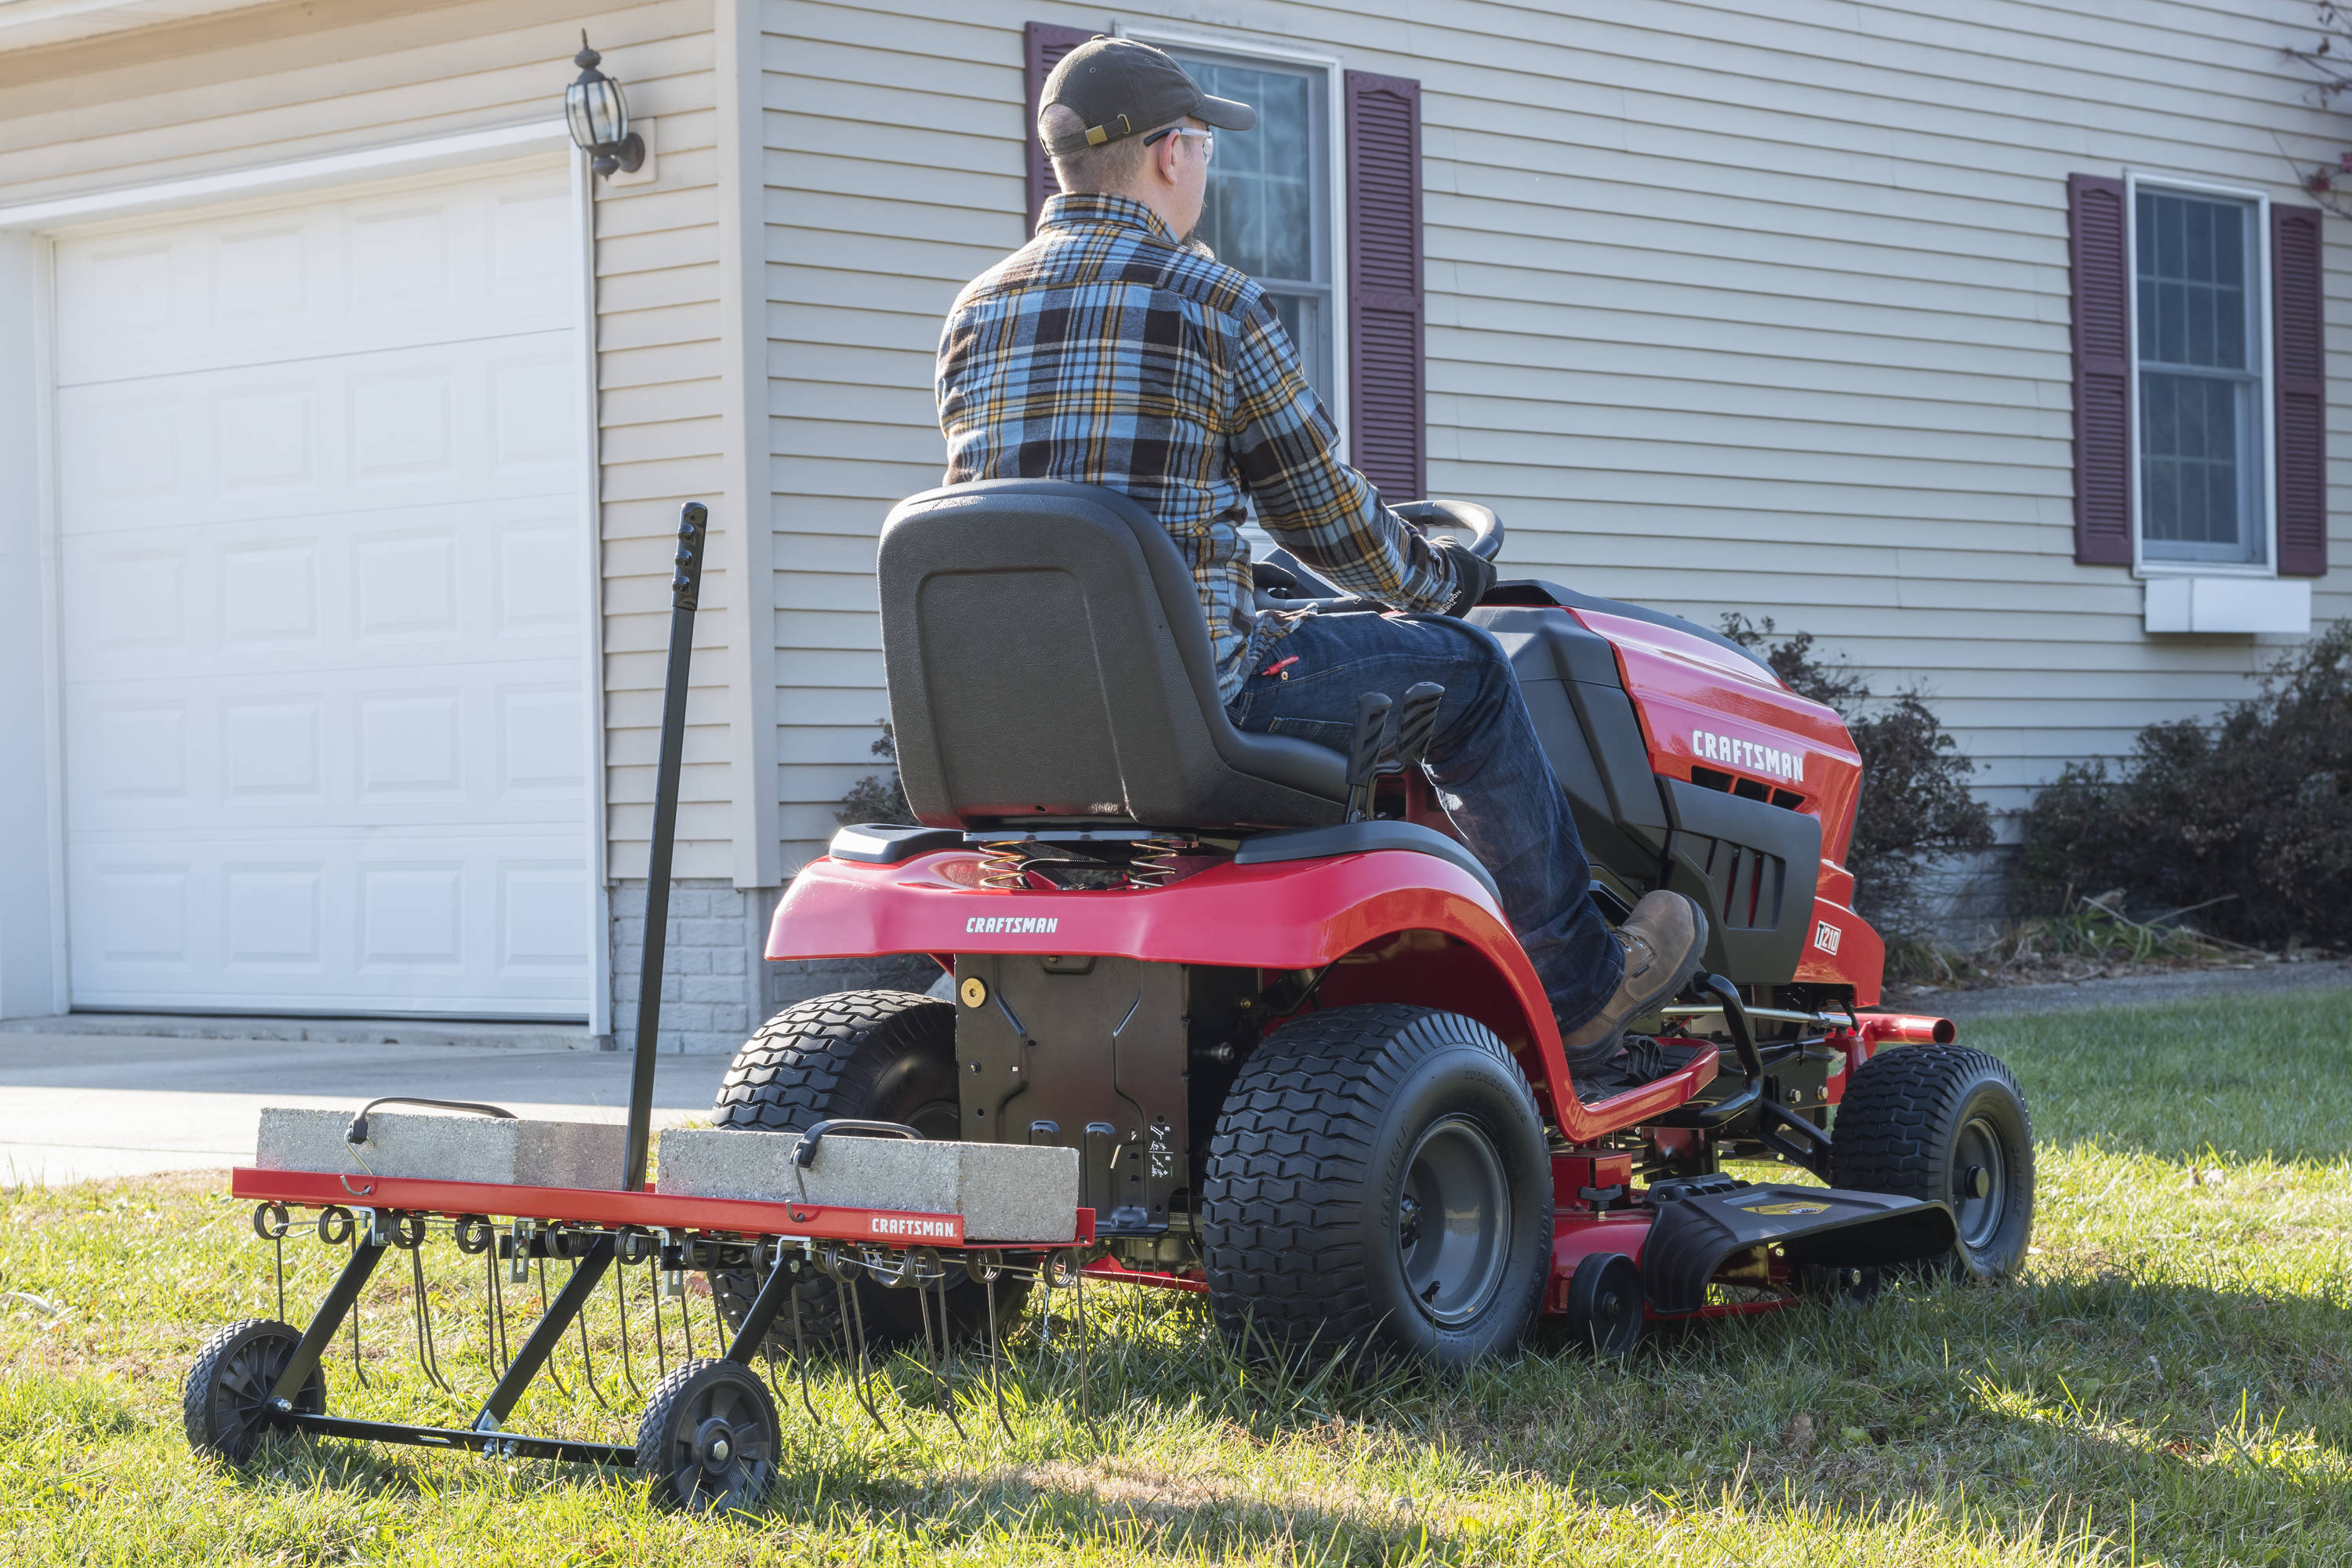 Image of Craftsman riding mower rake attachment